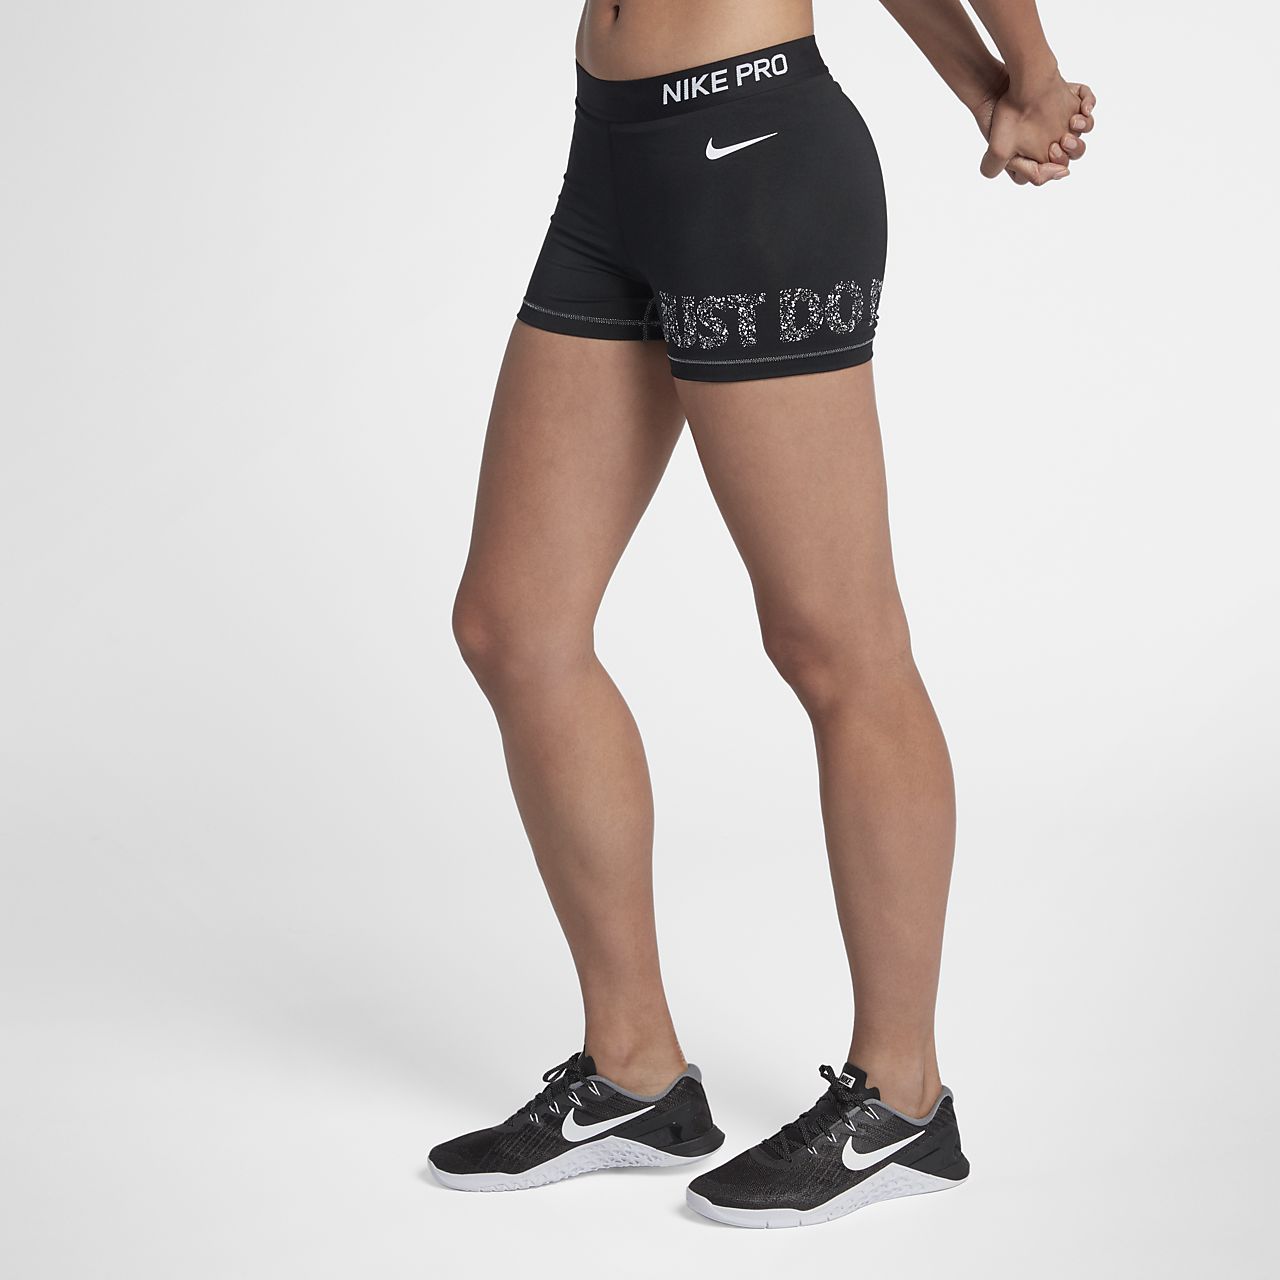 Шорты найк про. Шорты найк Pro. Женские шорты для тренинга Nike Pro. Шорты Nike Pro Pro женские. Шорты Dri-Fit v.